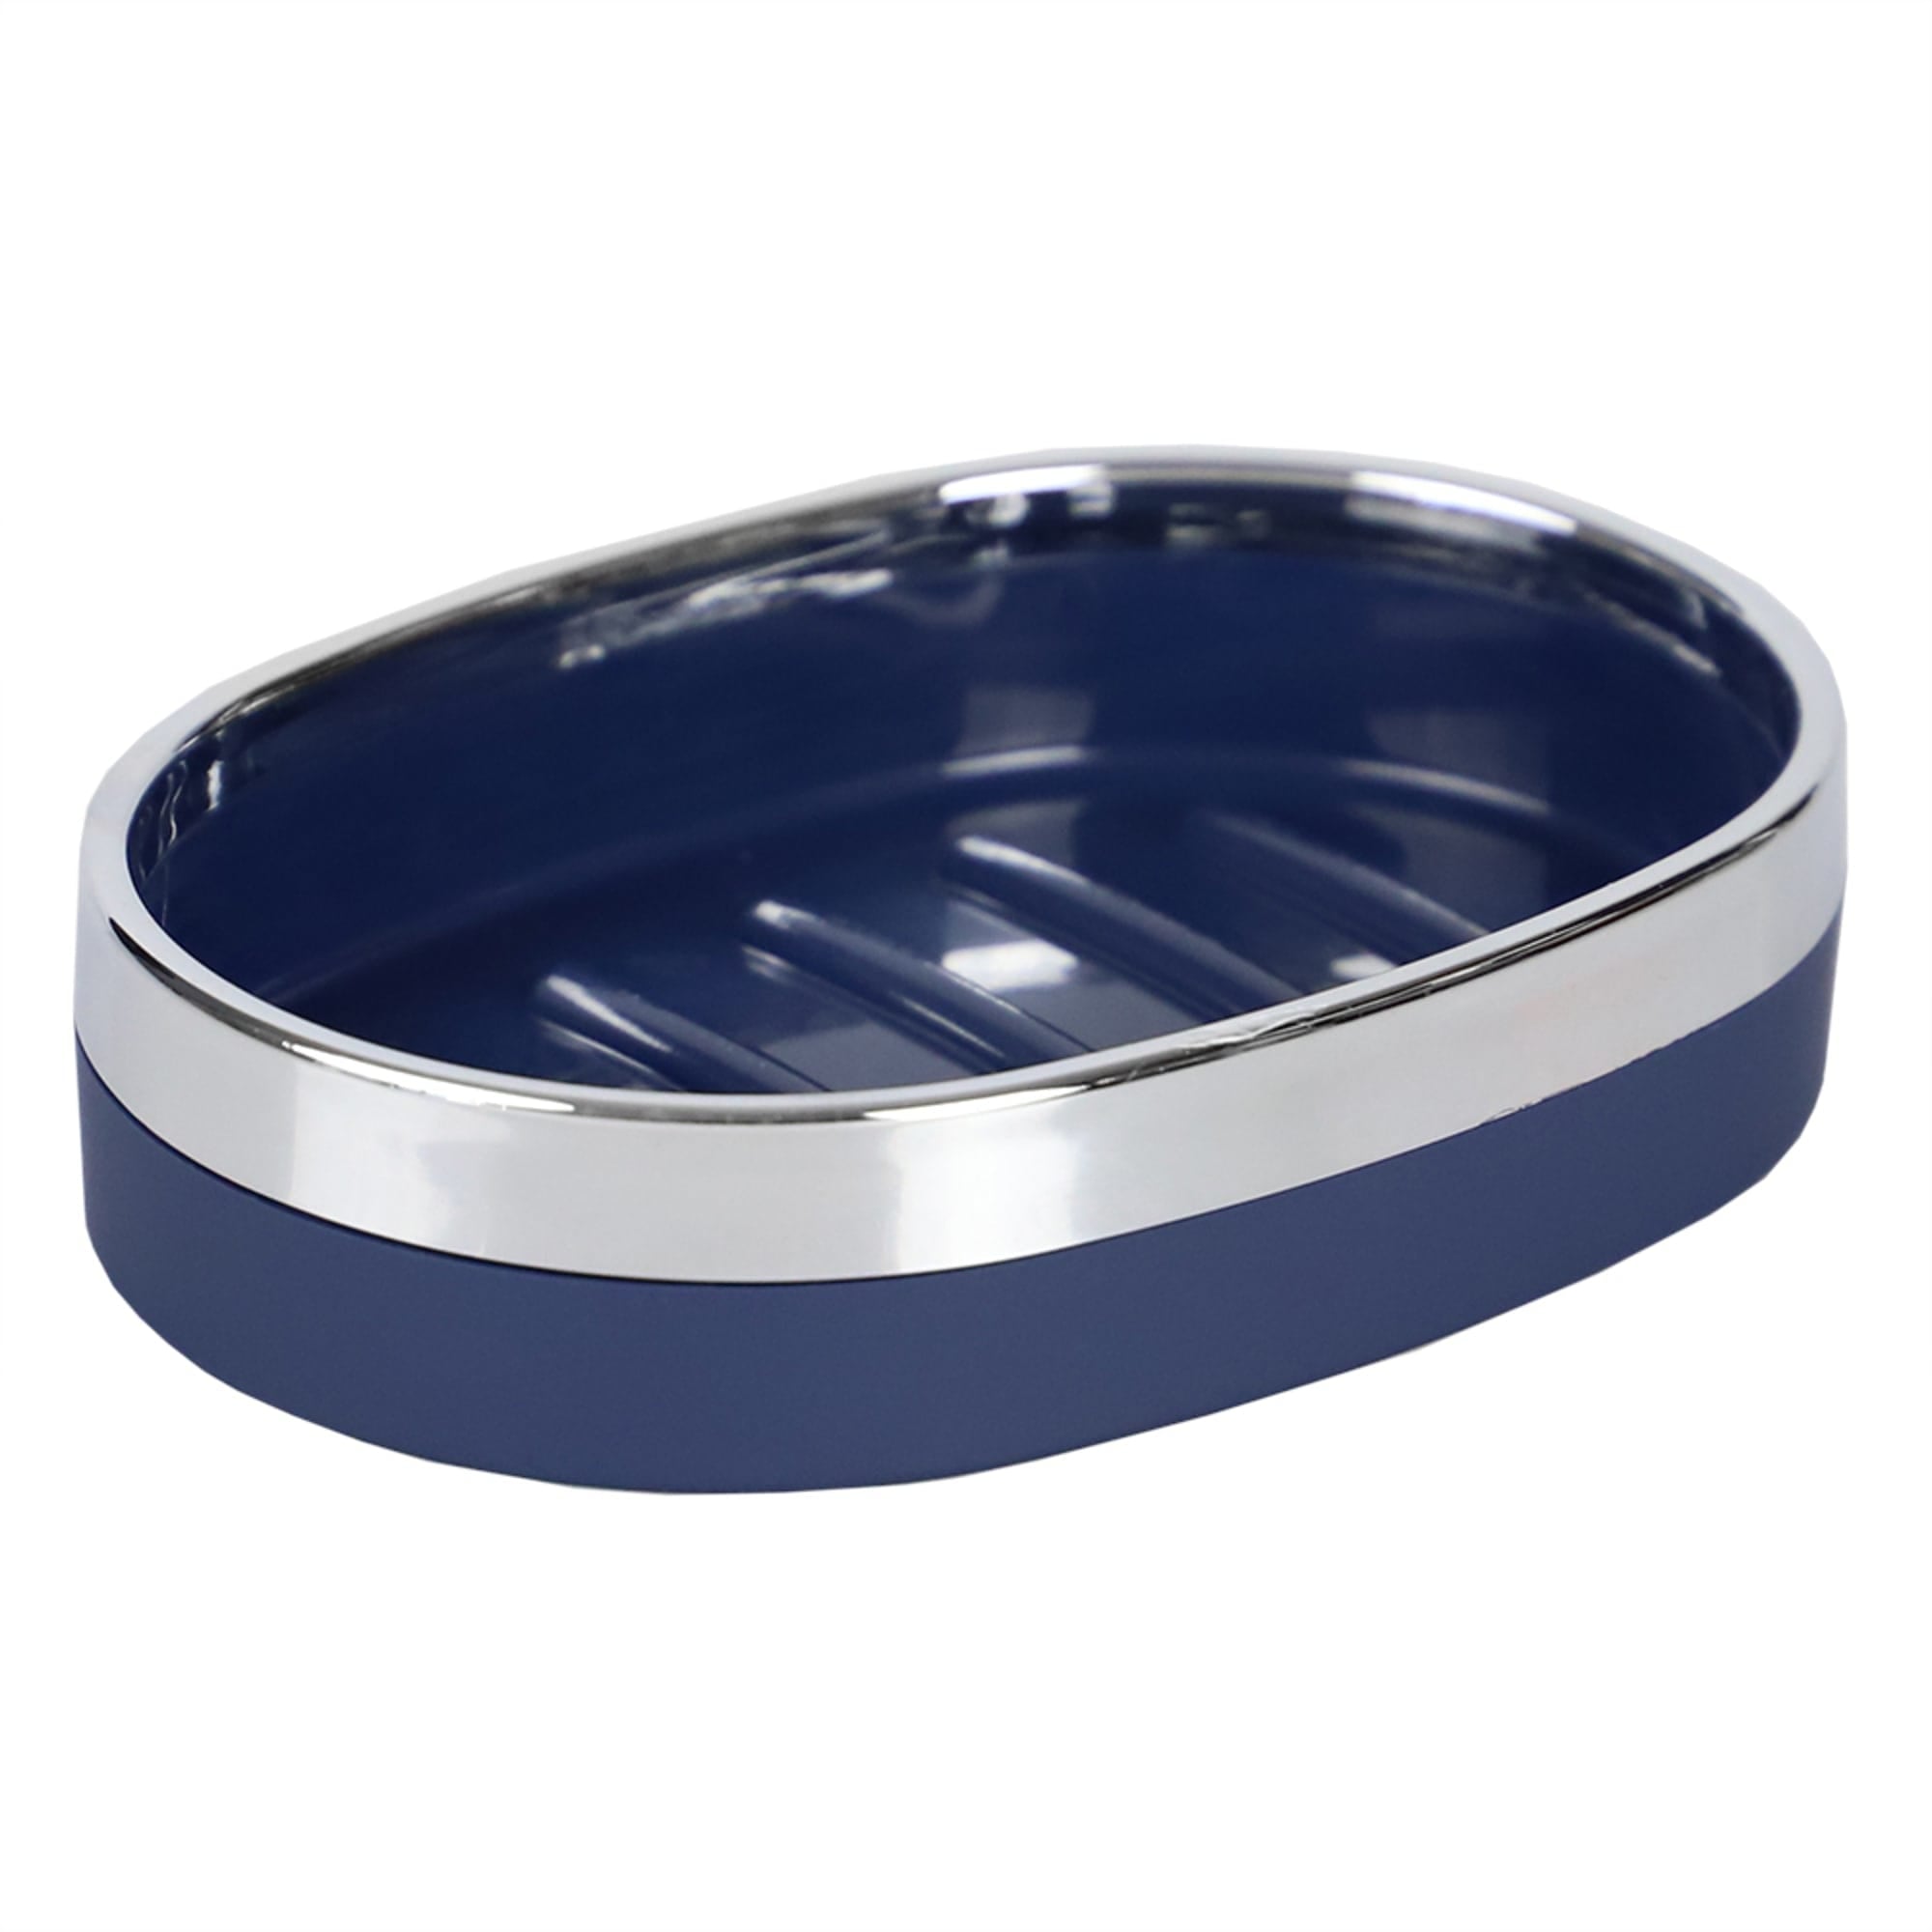 Home Basics Skylar Oval Ridged ABS Plastic Soap Dish, Navy $3.00 EACH, CASE PACK OF 12